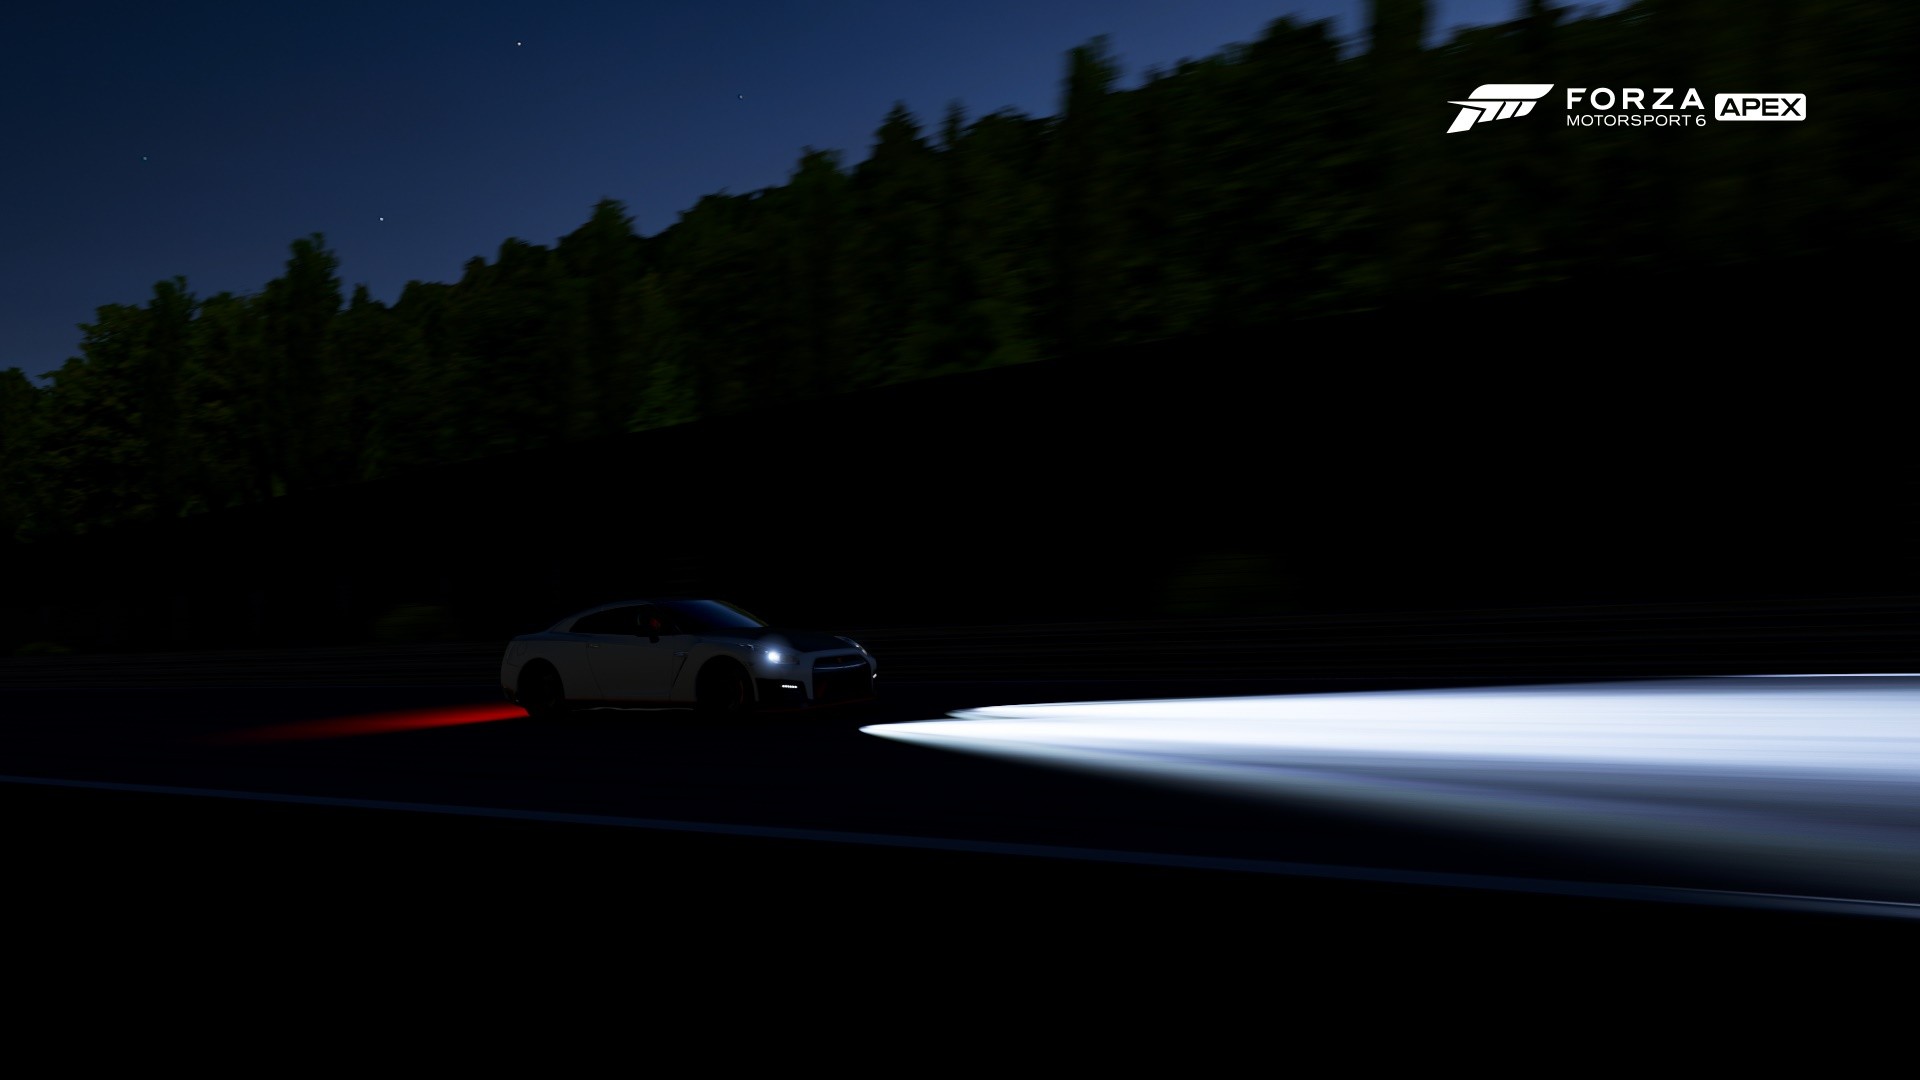 Video Games Forza Motorsport 6 Night Car Vehicle Lights Race Tracks Nissan GT R R35 1920x1080